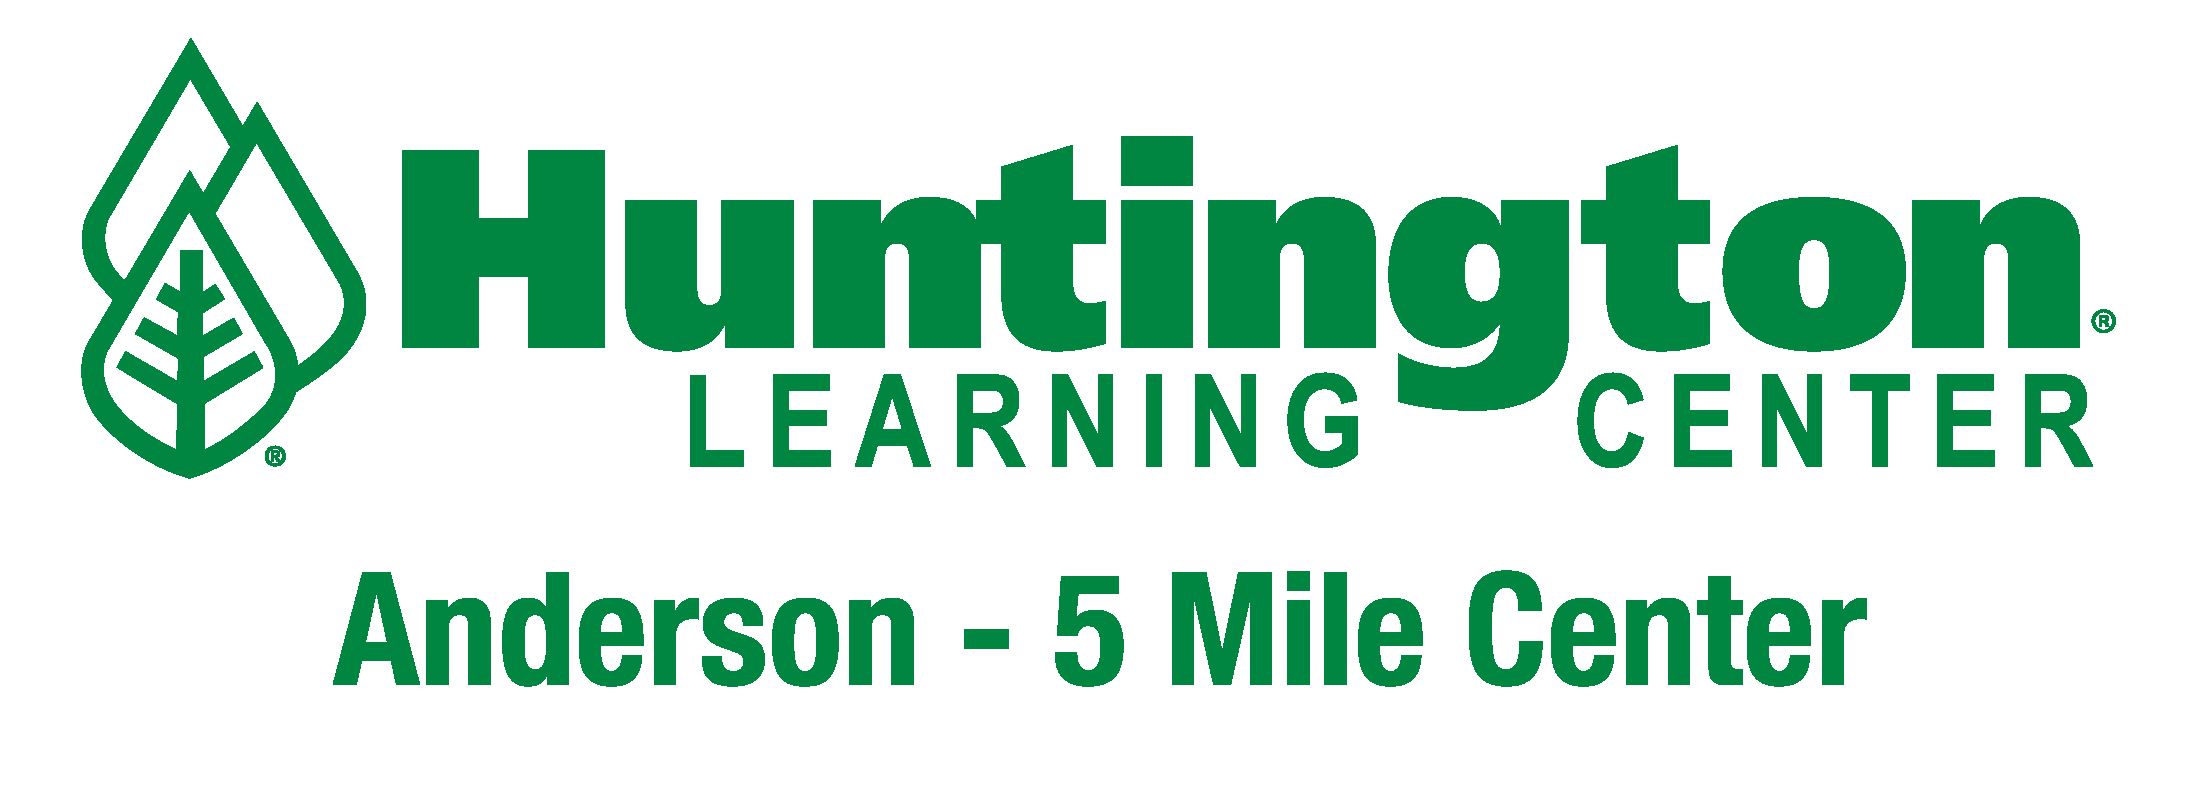 Huntington Learning Center - Anderson logo